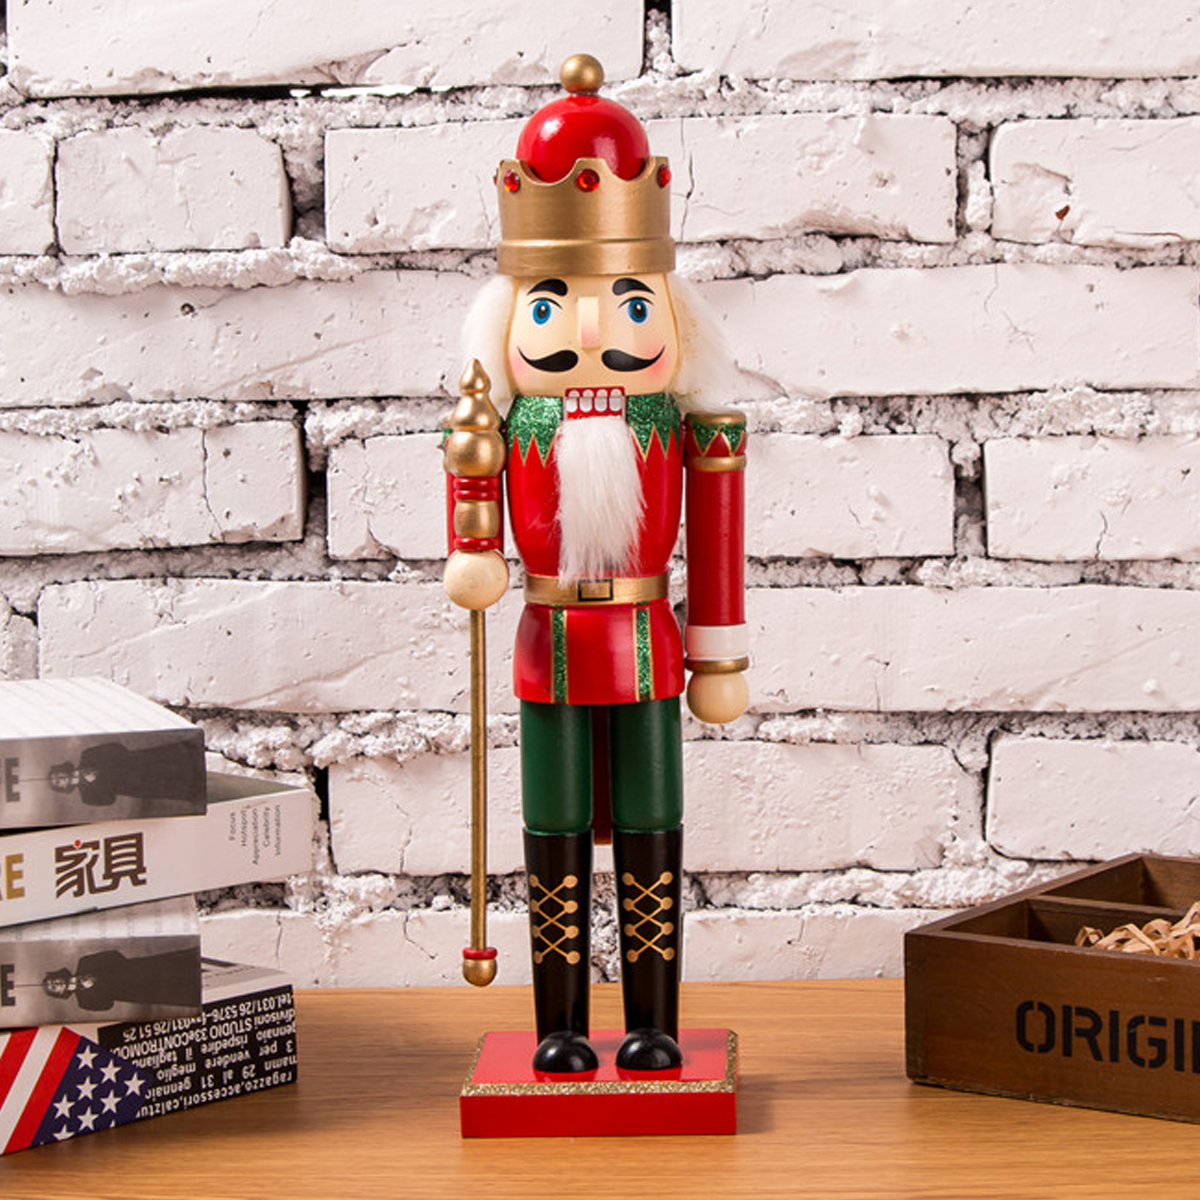 35cm-Wooden-Nutcracker-Doll-Soldier-Vintage-Handcraft-Decoration-Christmas-Gifts-1398445-3